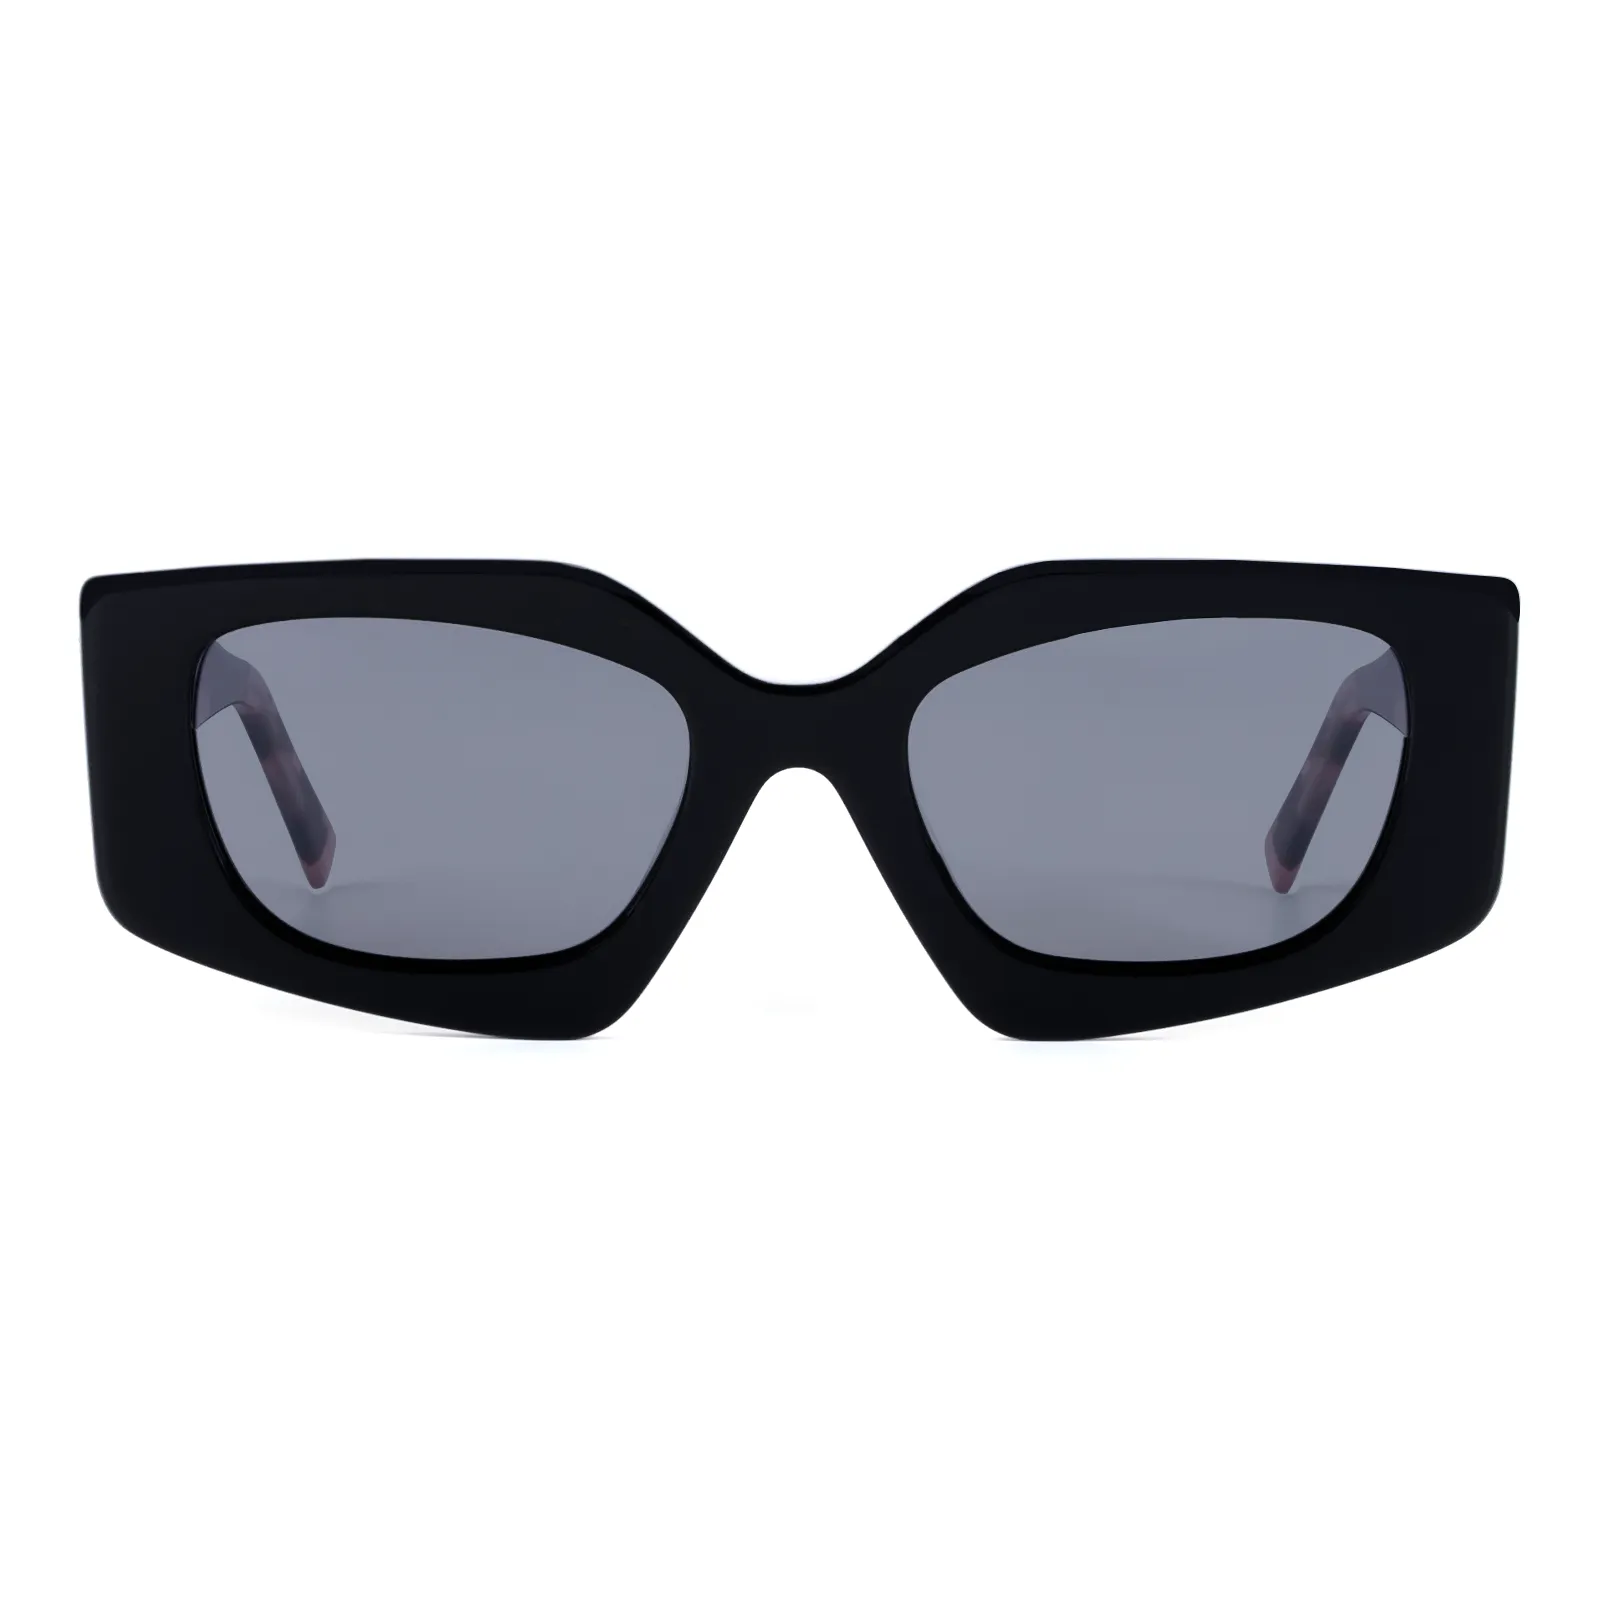 Beata - Geometric Black-tortoisehell Sunglasses for Women